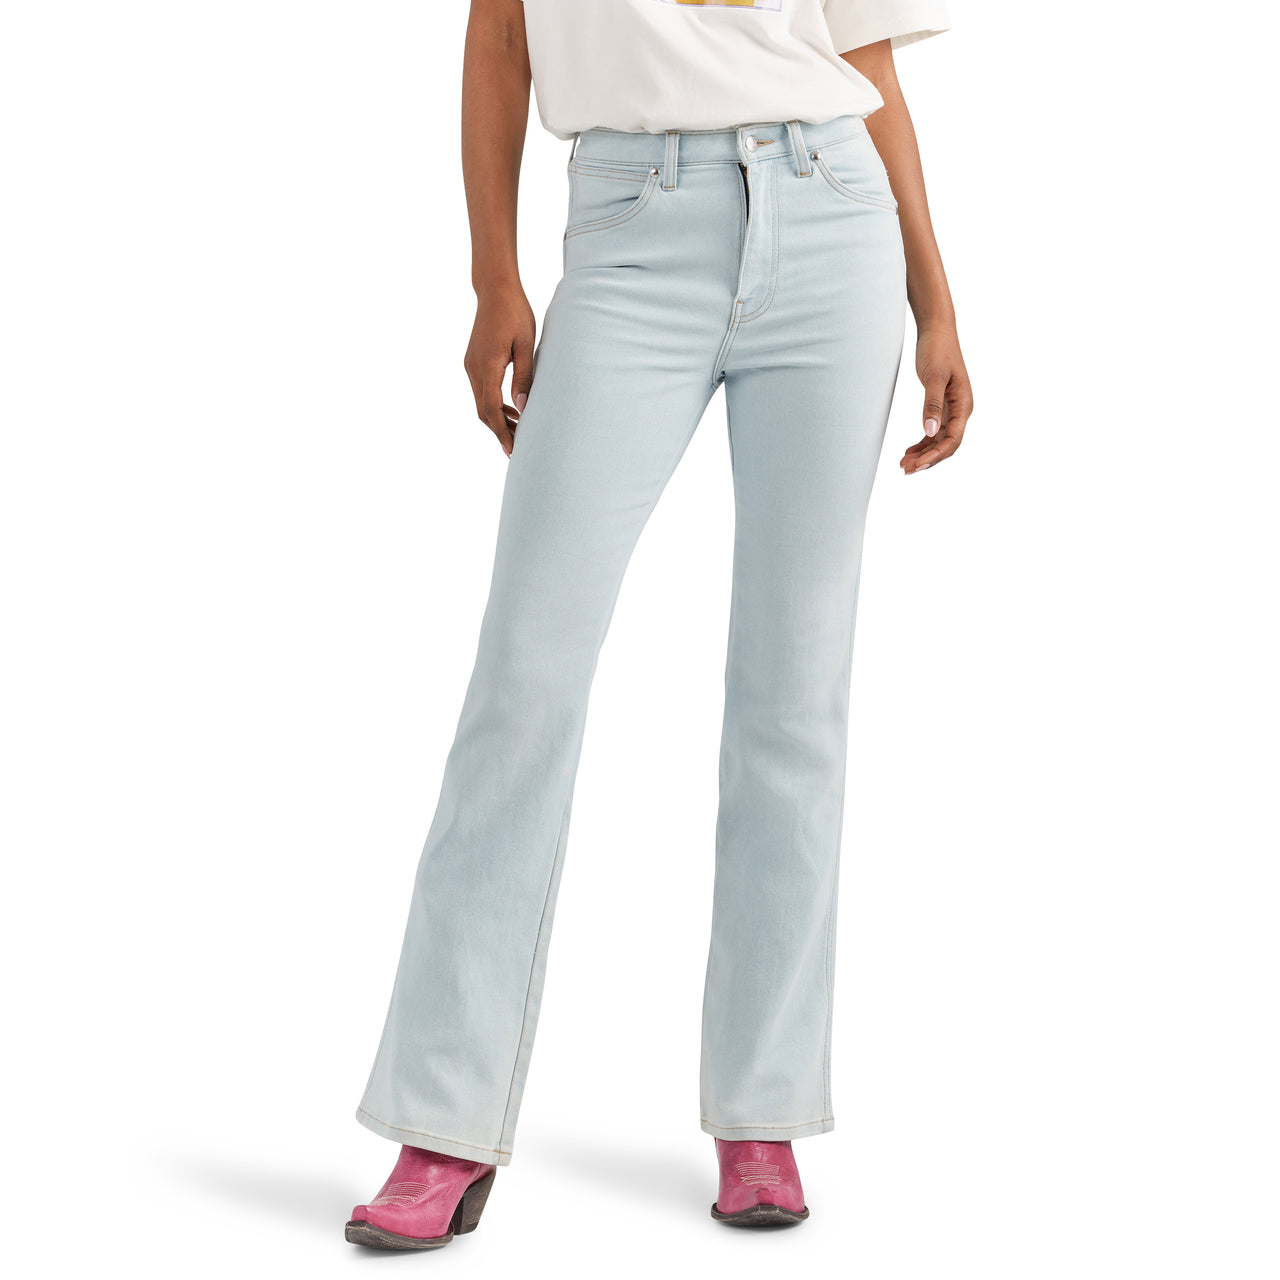 Wrangler X Barbie Women's Bootcut Jeans - Light Wash